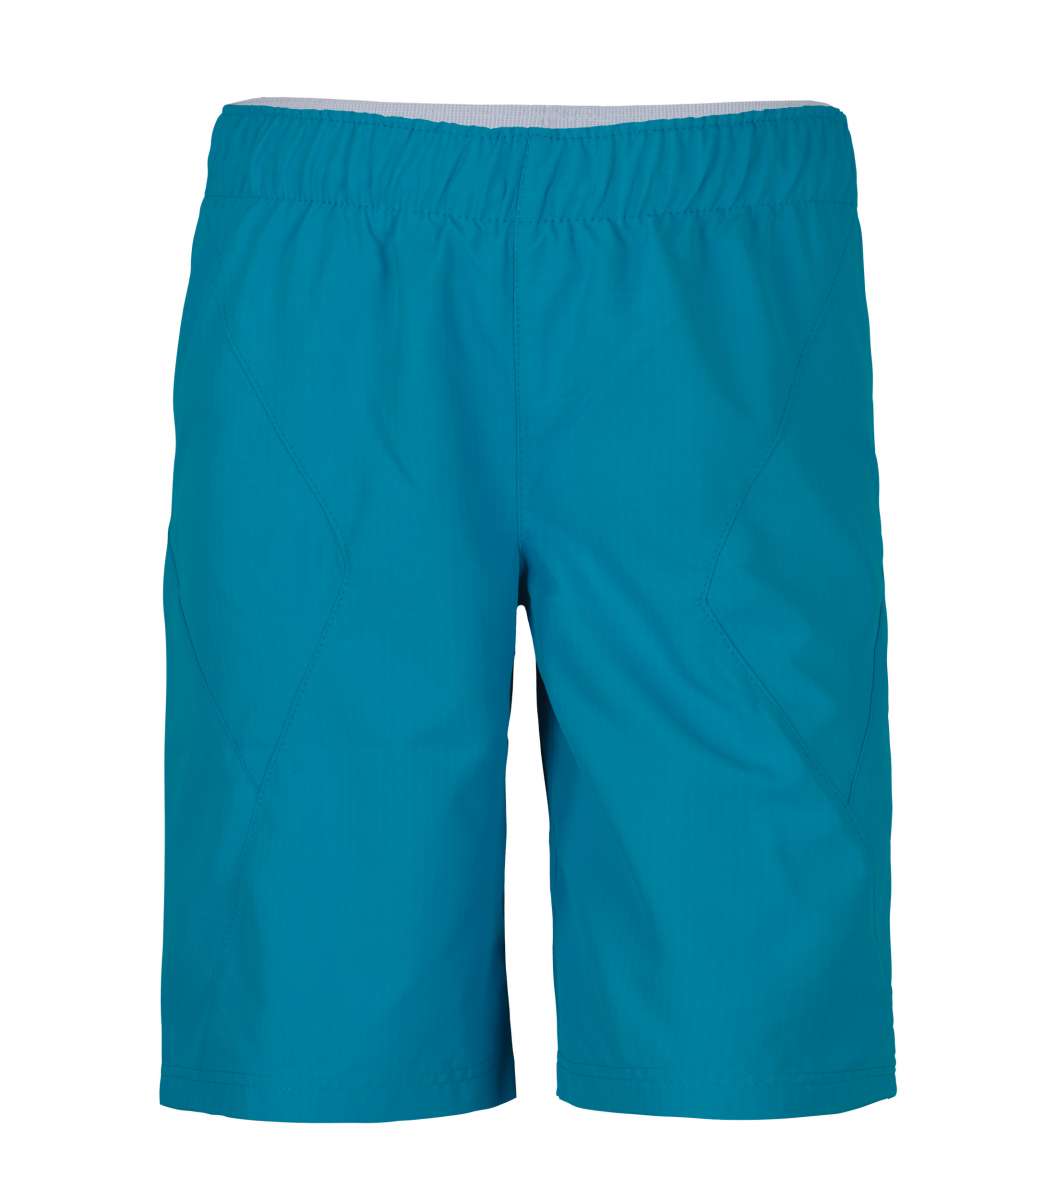 Board shorts ’fiera capri‘ front view 